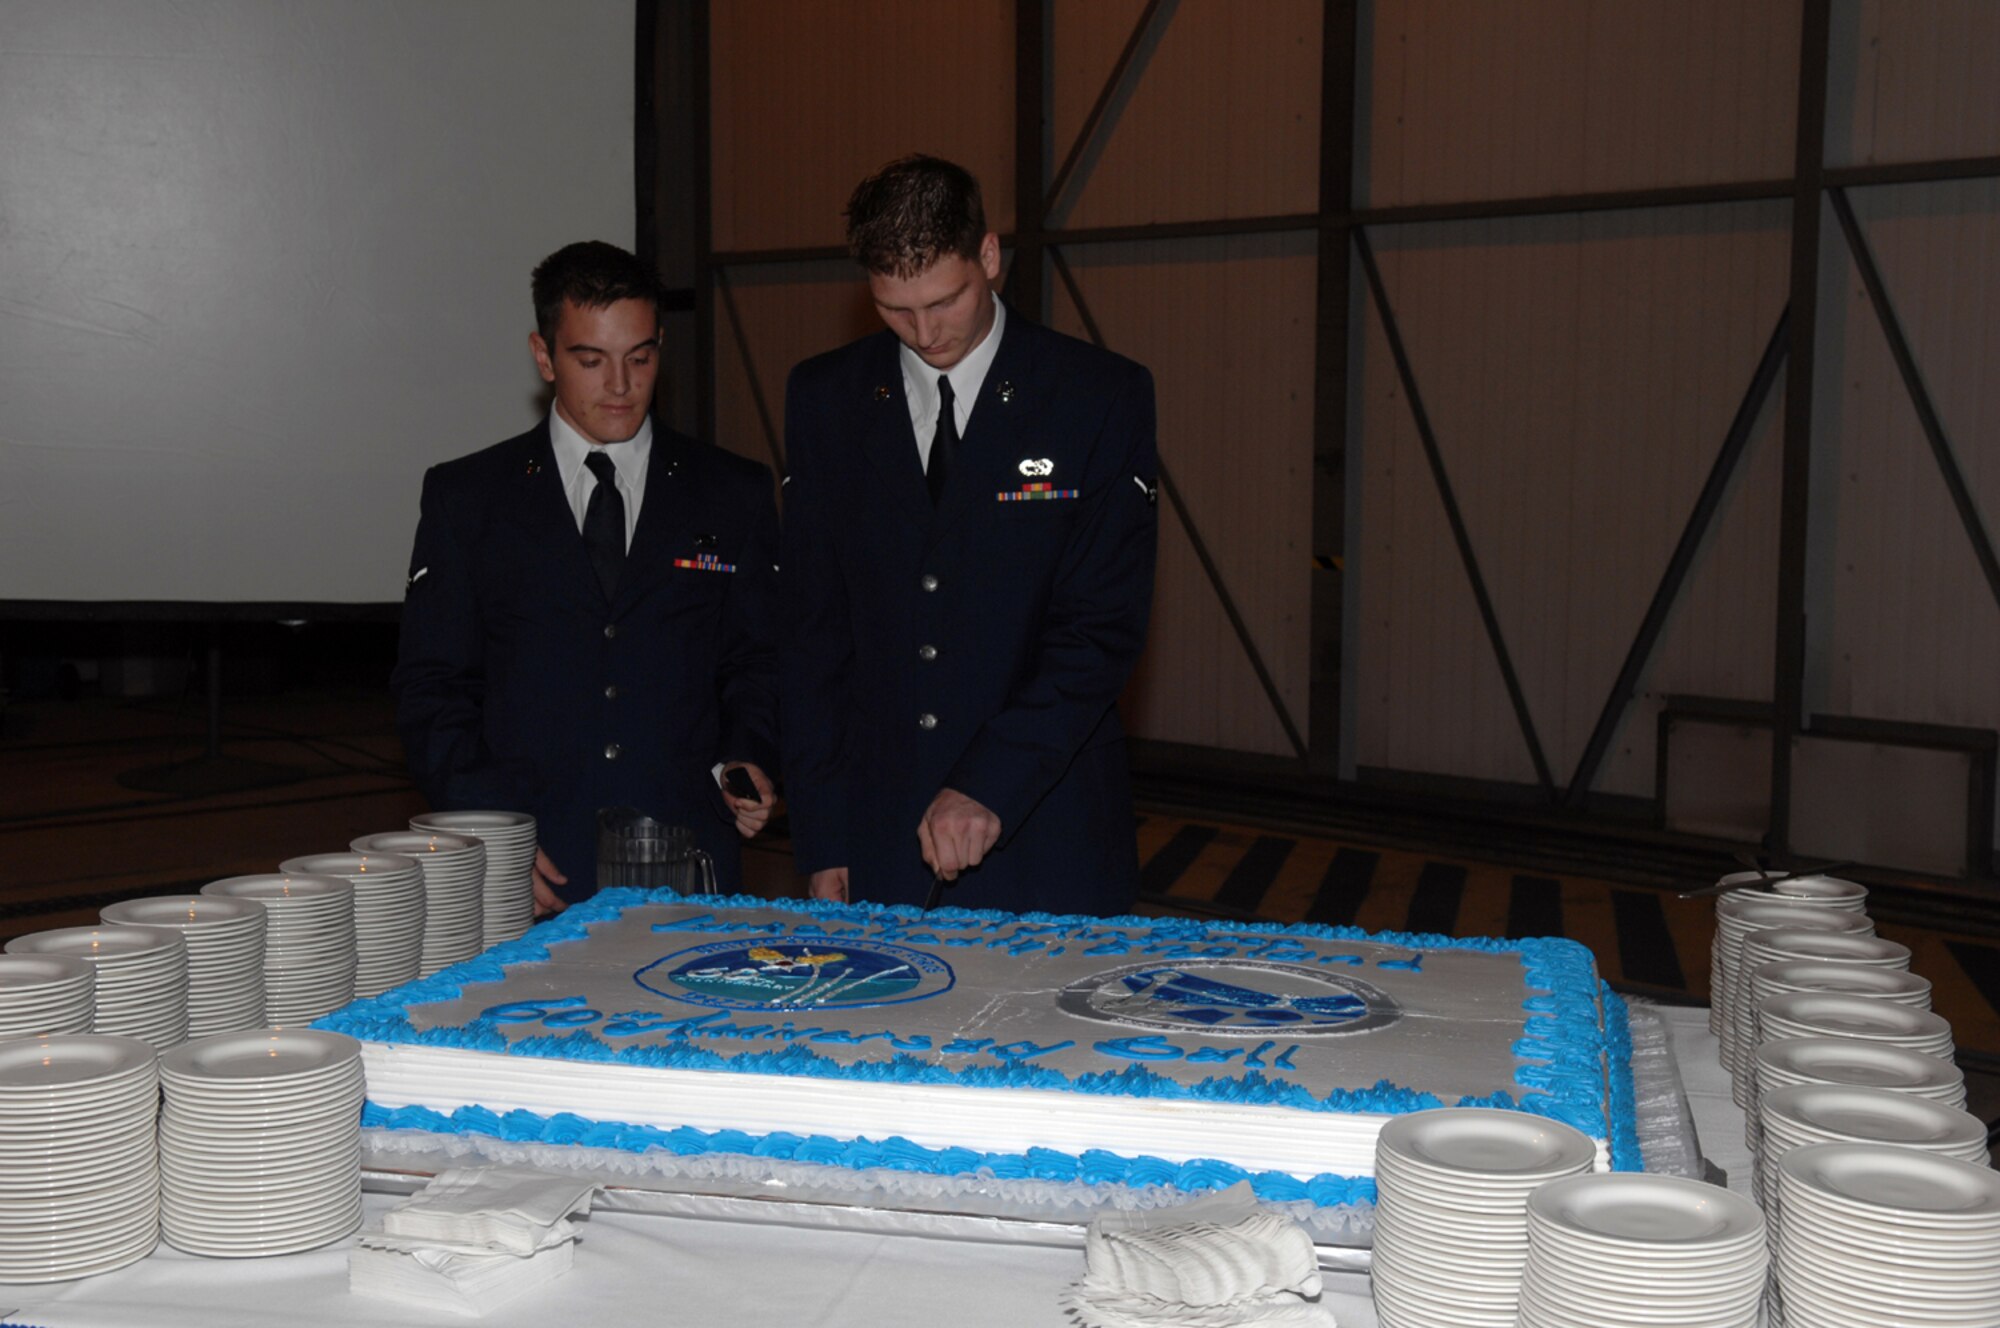 Two of the most junior Airmen cut cake at the RAF Lakenheath 60th Anniversary Air Force ball Sept. 8. (U.S. Air Force photo by Tech. Sgt. Sabrina Johnson)